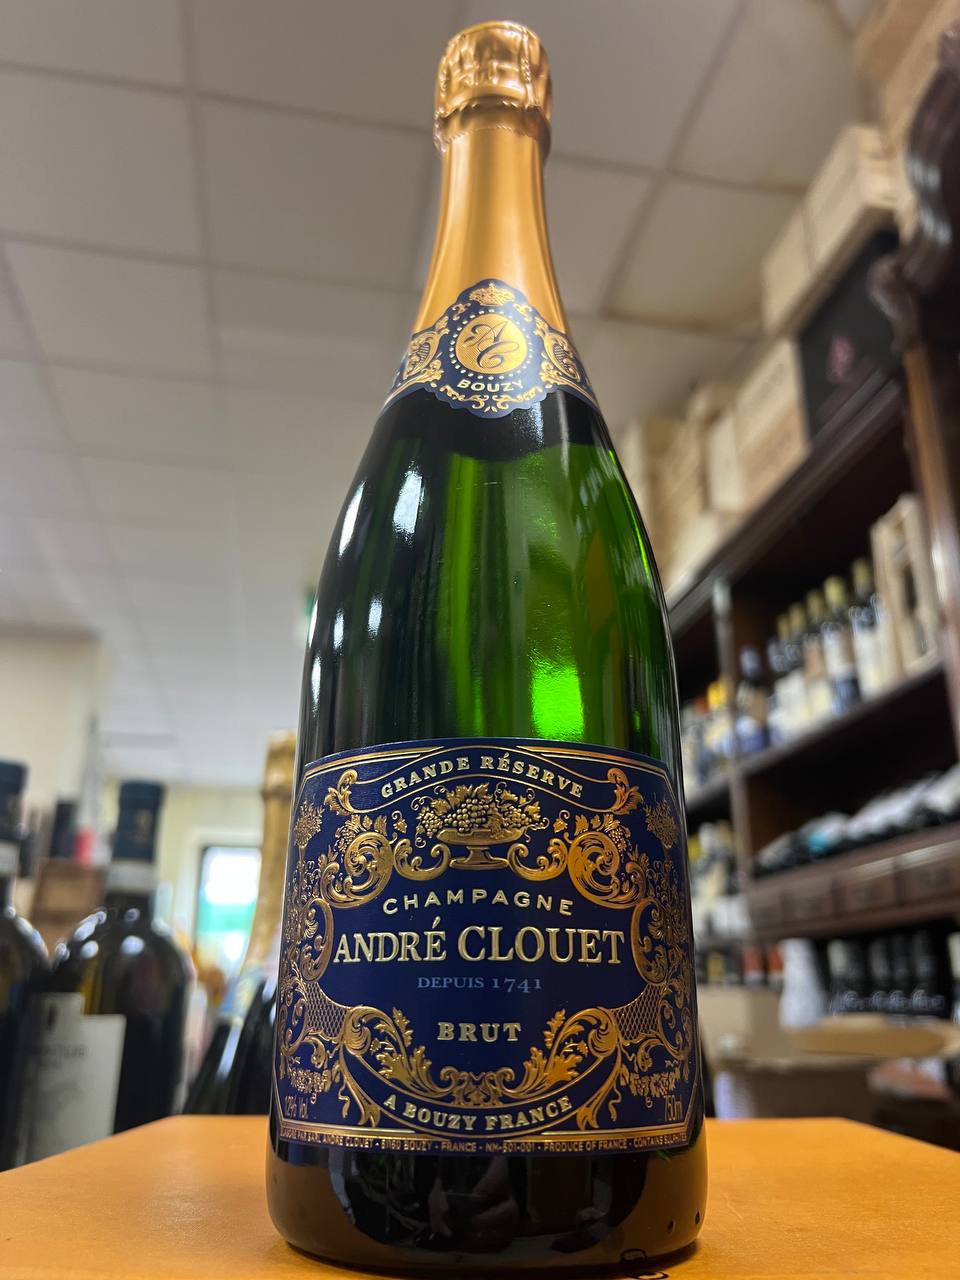 André Clouet Grande Reserve Champagne Brut